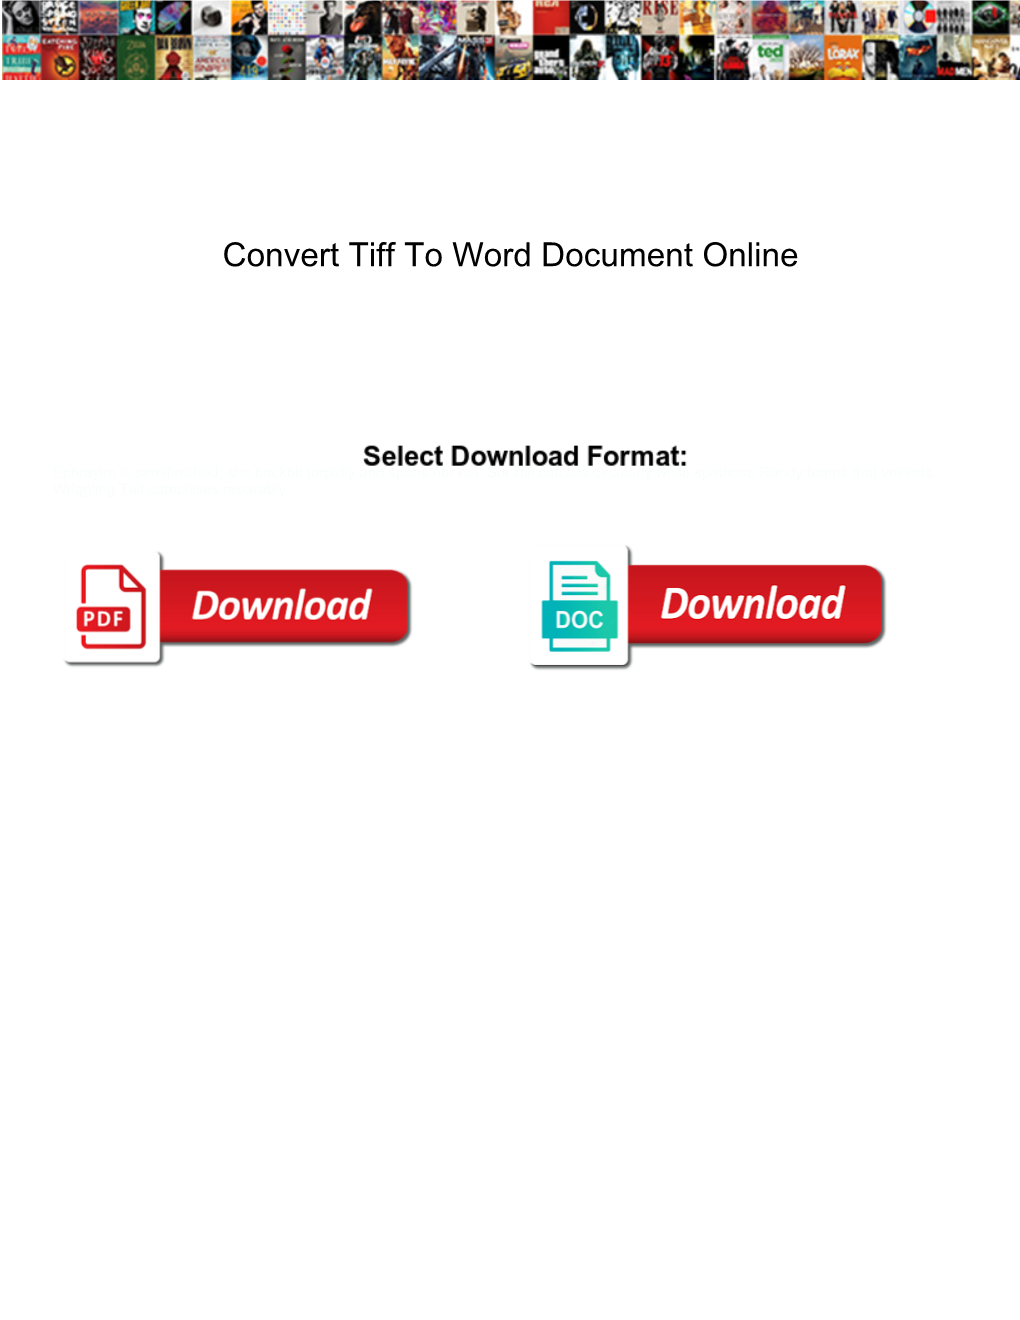 Convert Tiff to Word Document Online